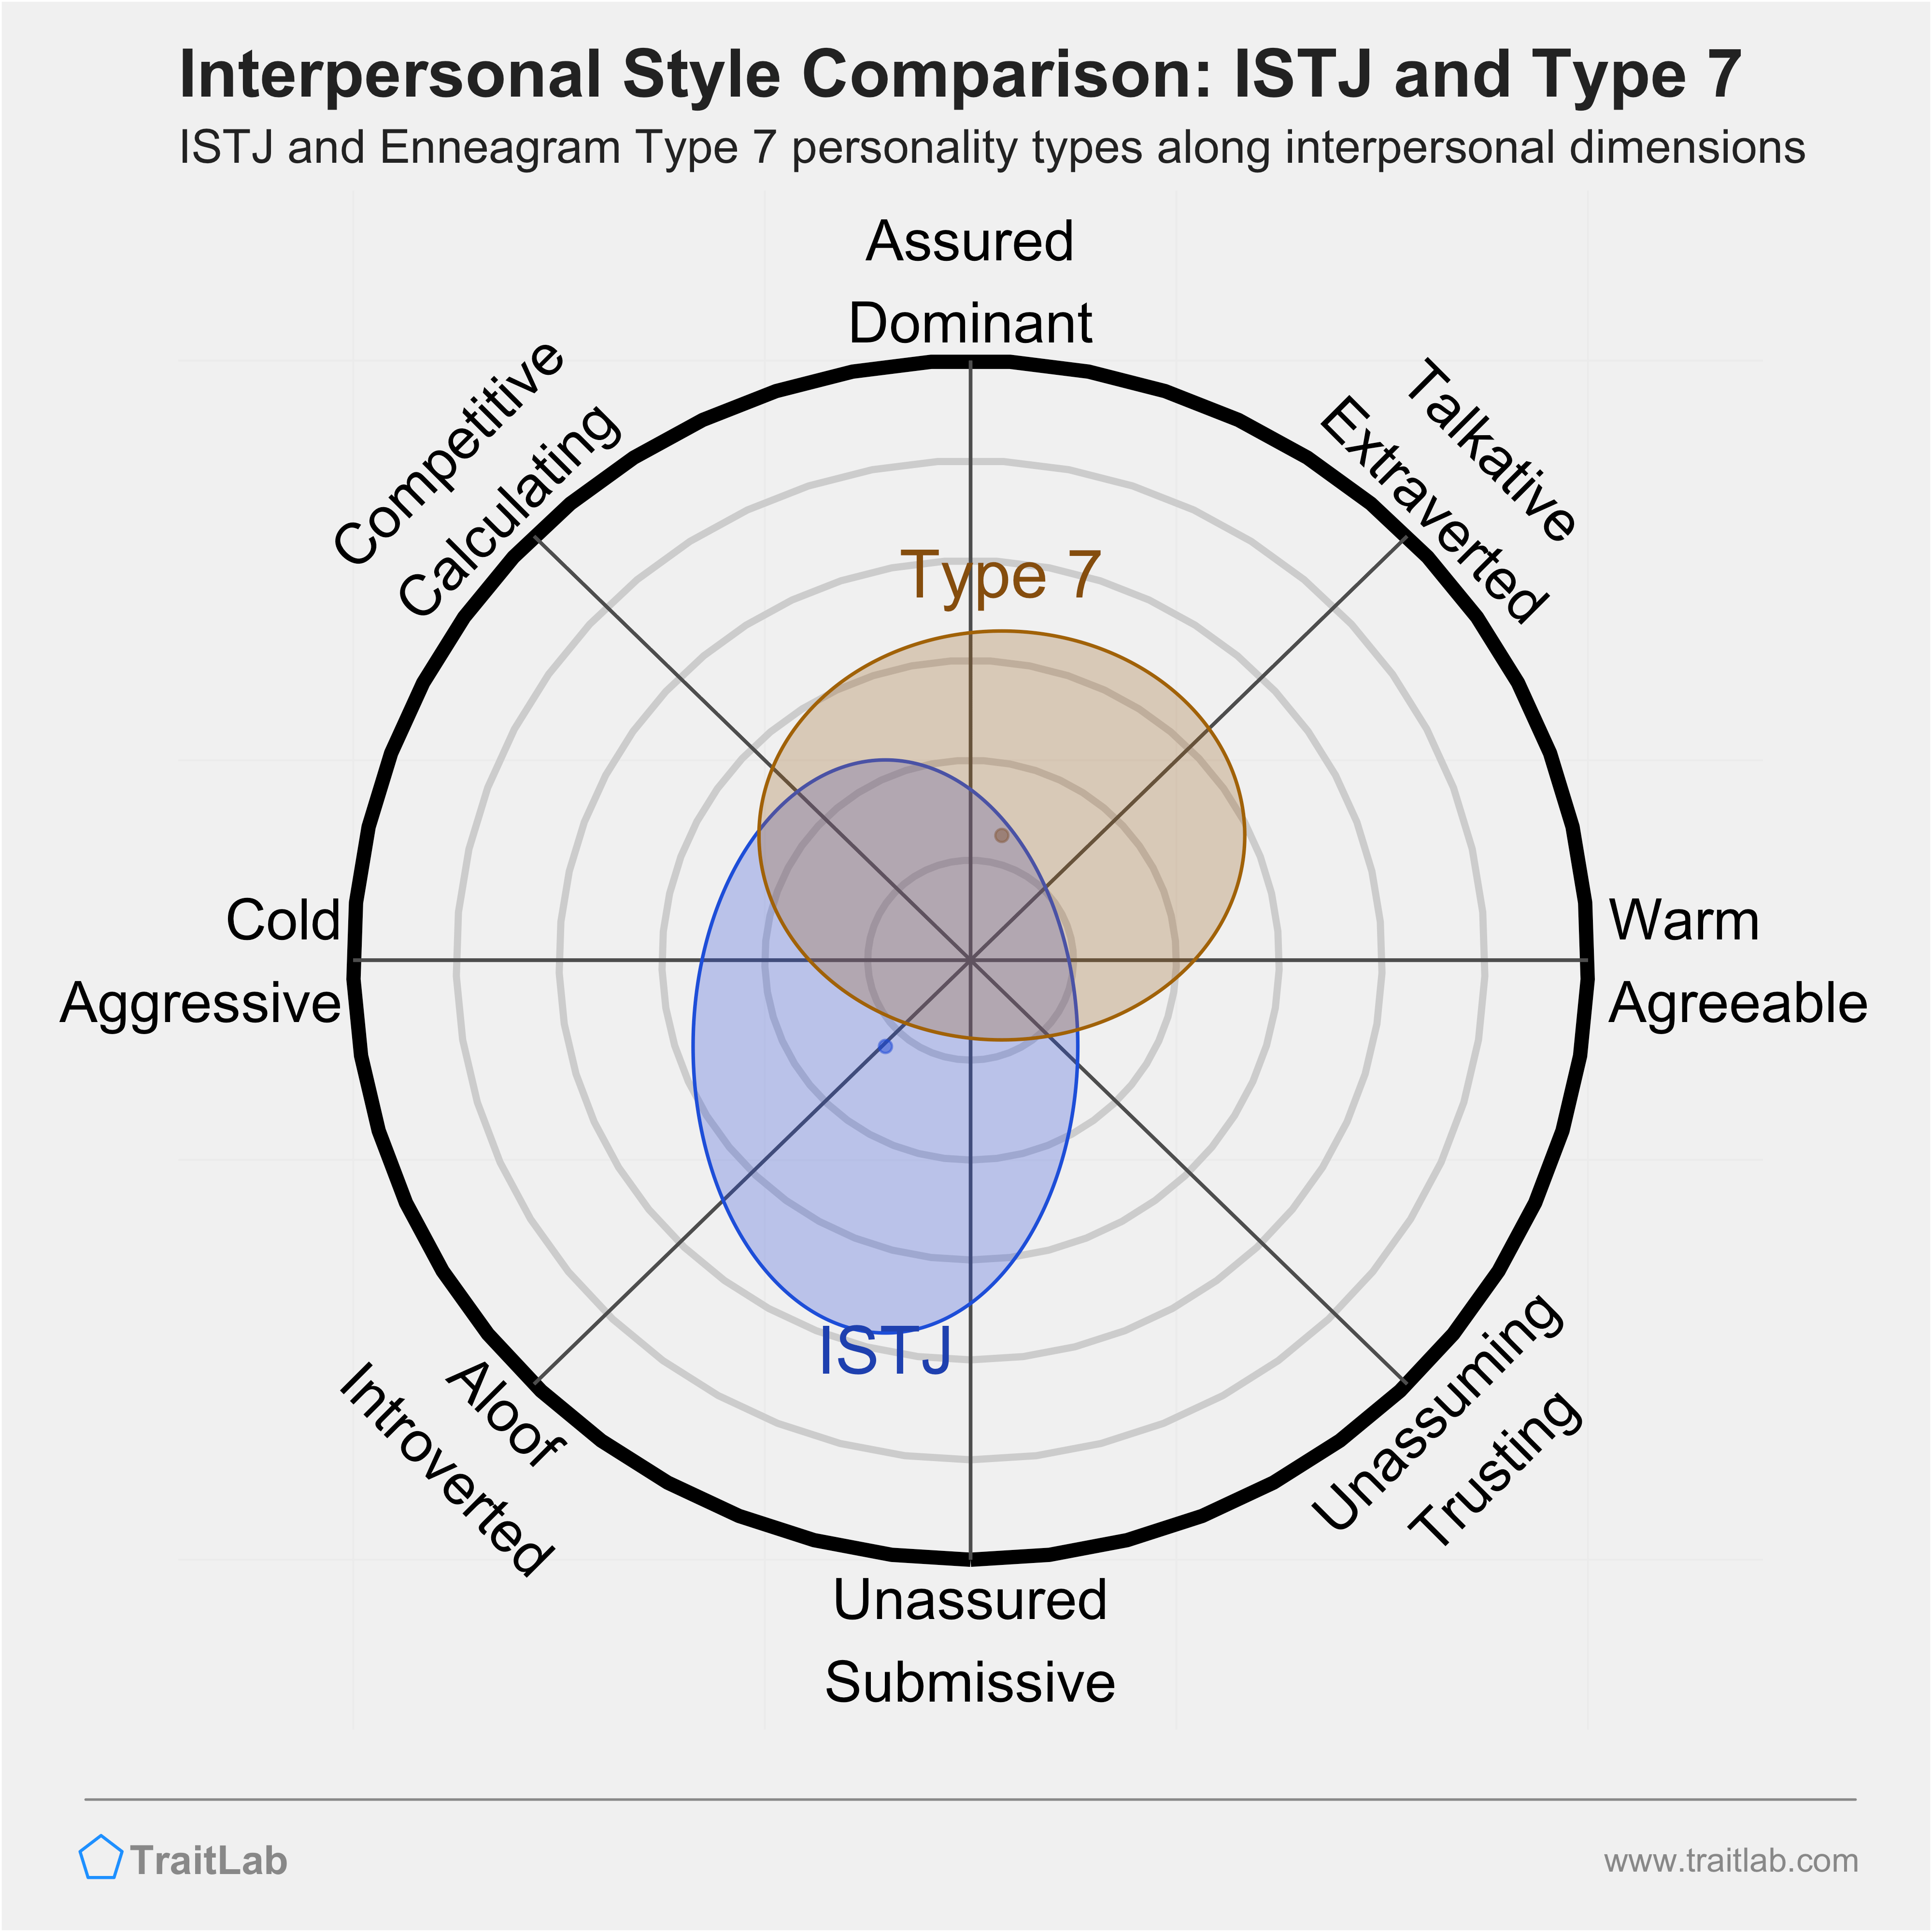 Enneagram ISTJ and Type 7 comparison across interpersonal dimensions